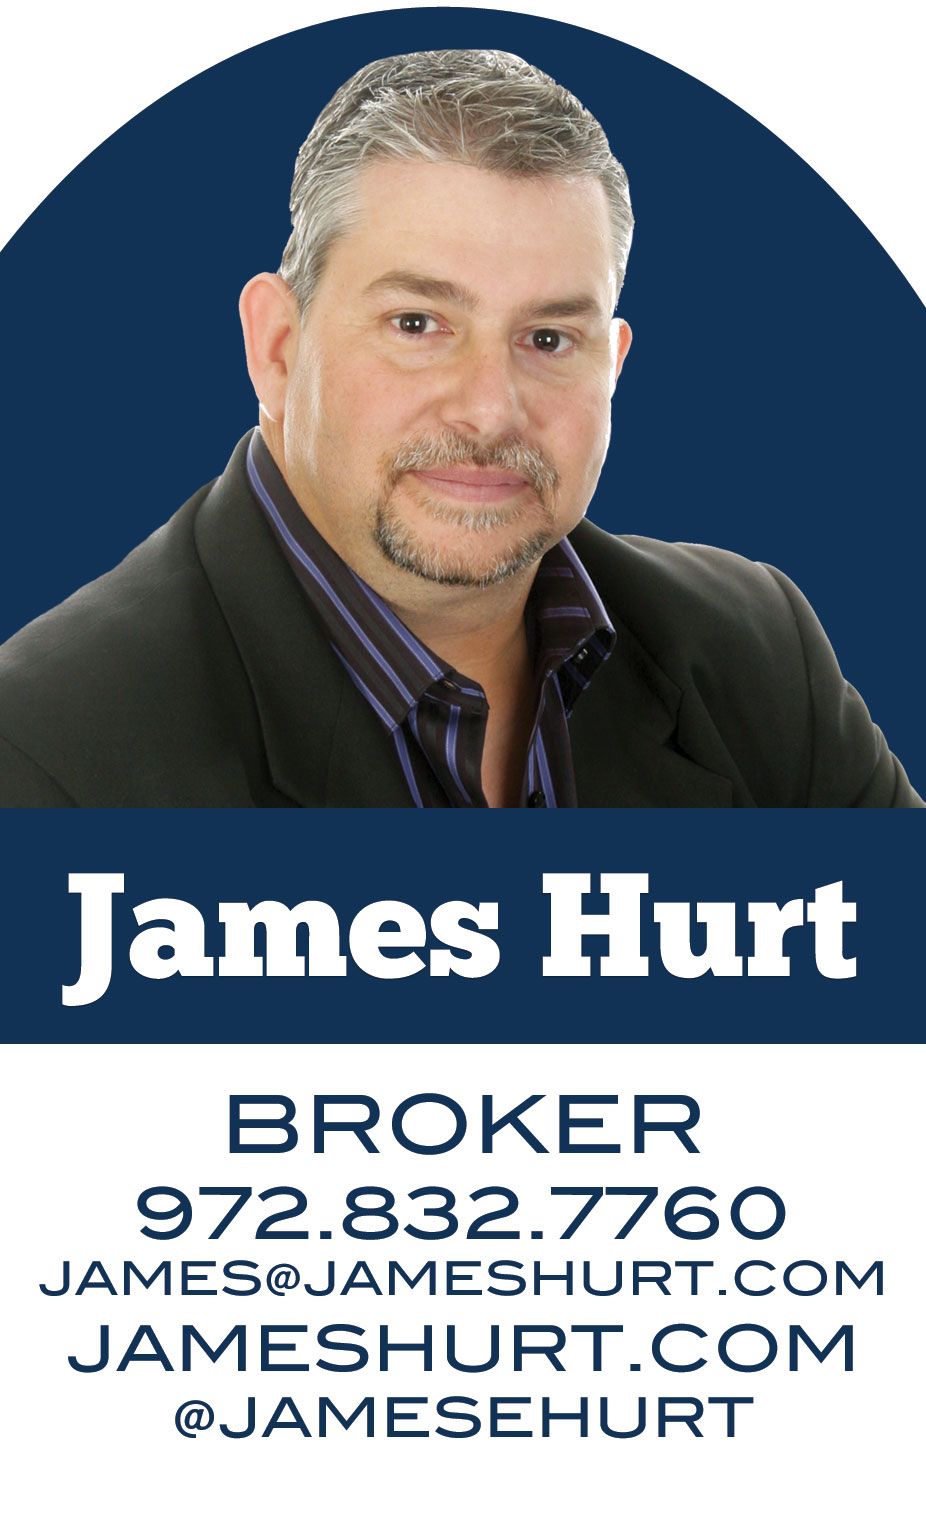 James Hurt & Co.